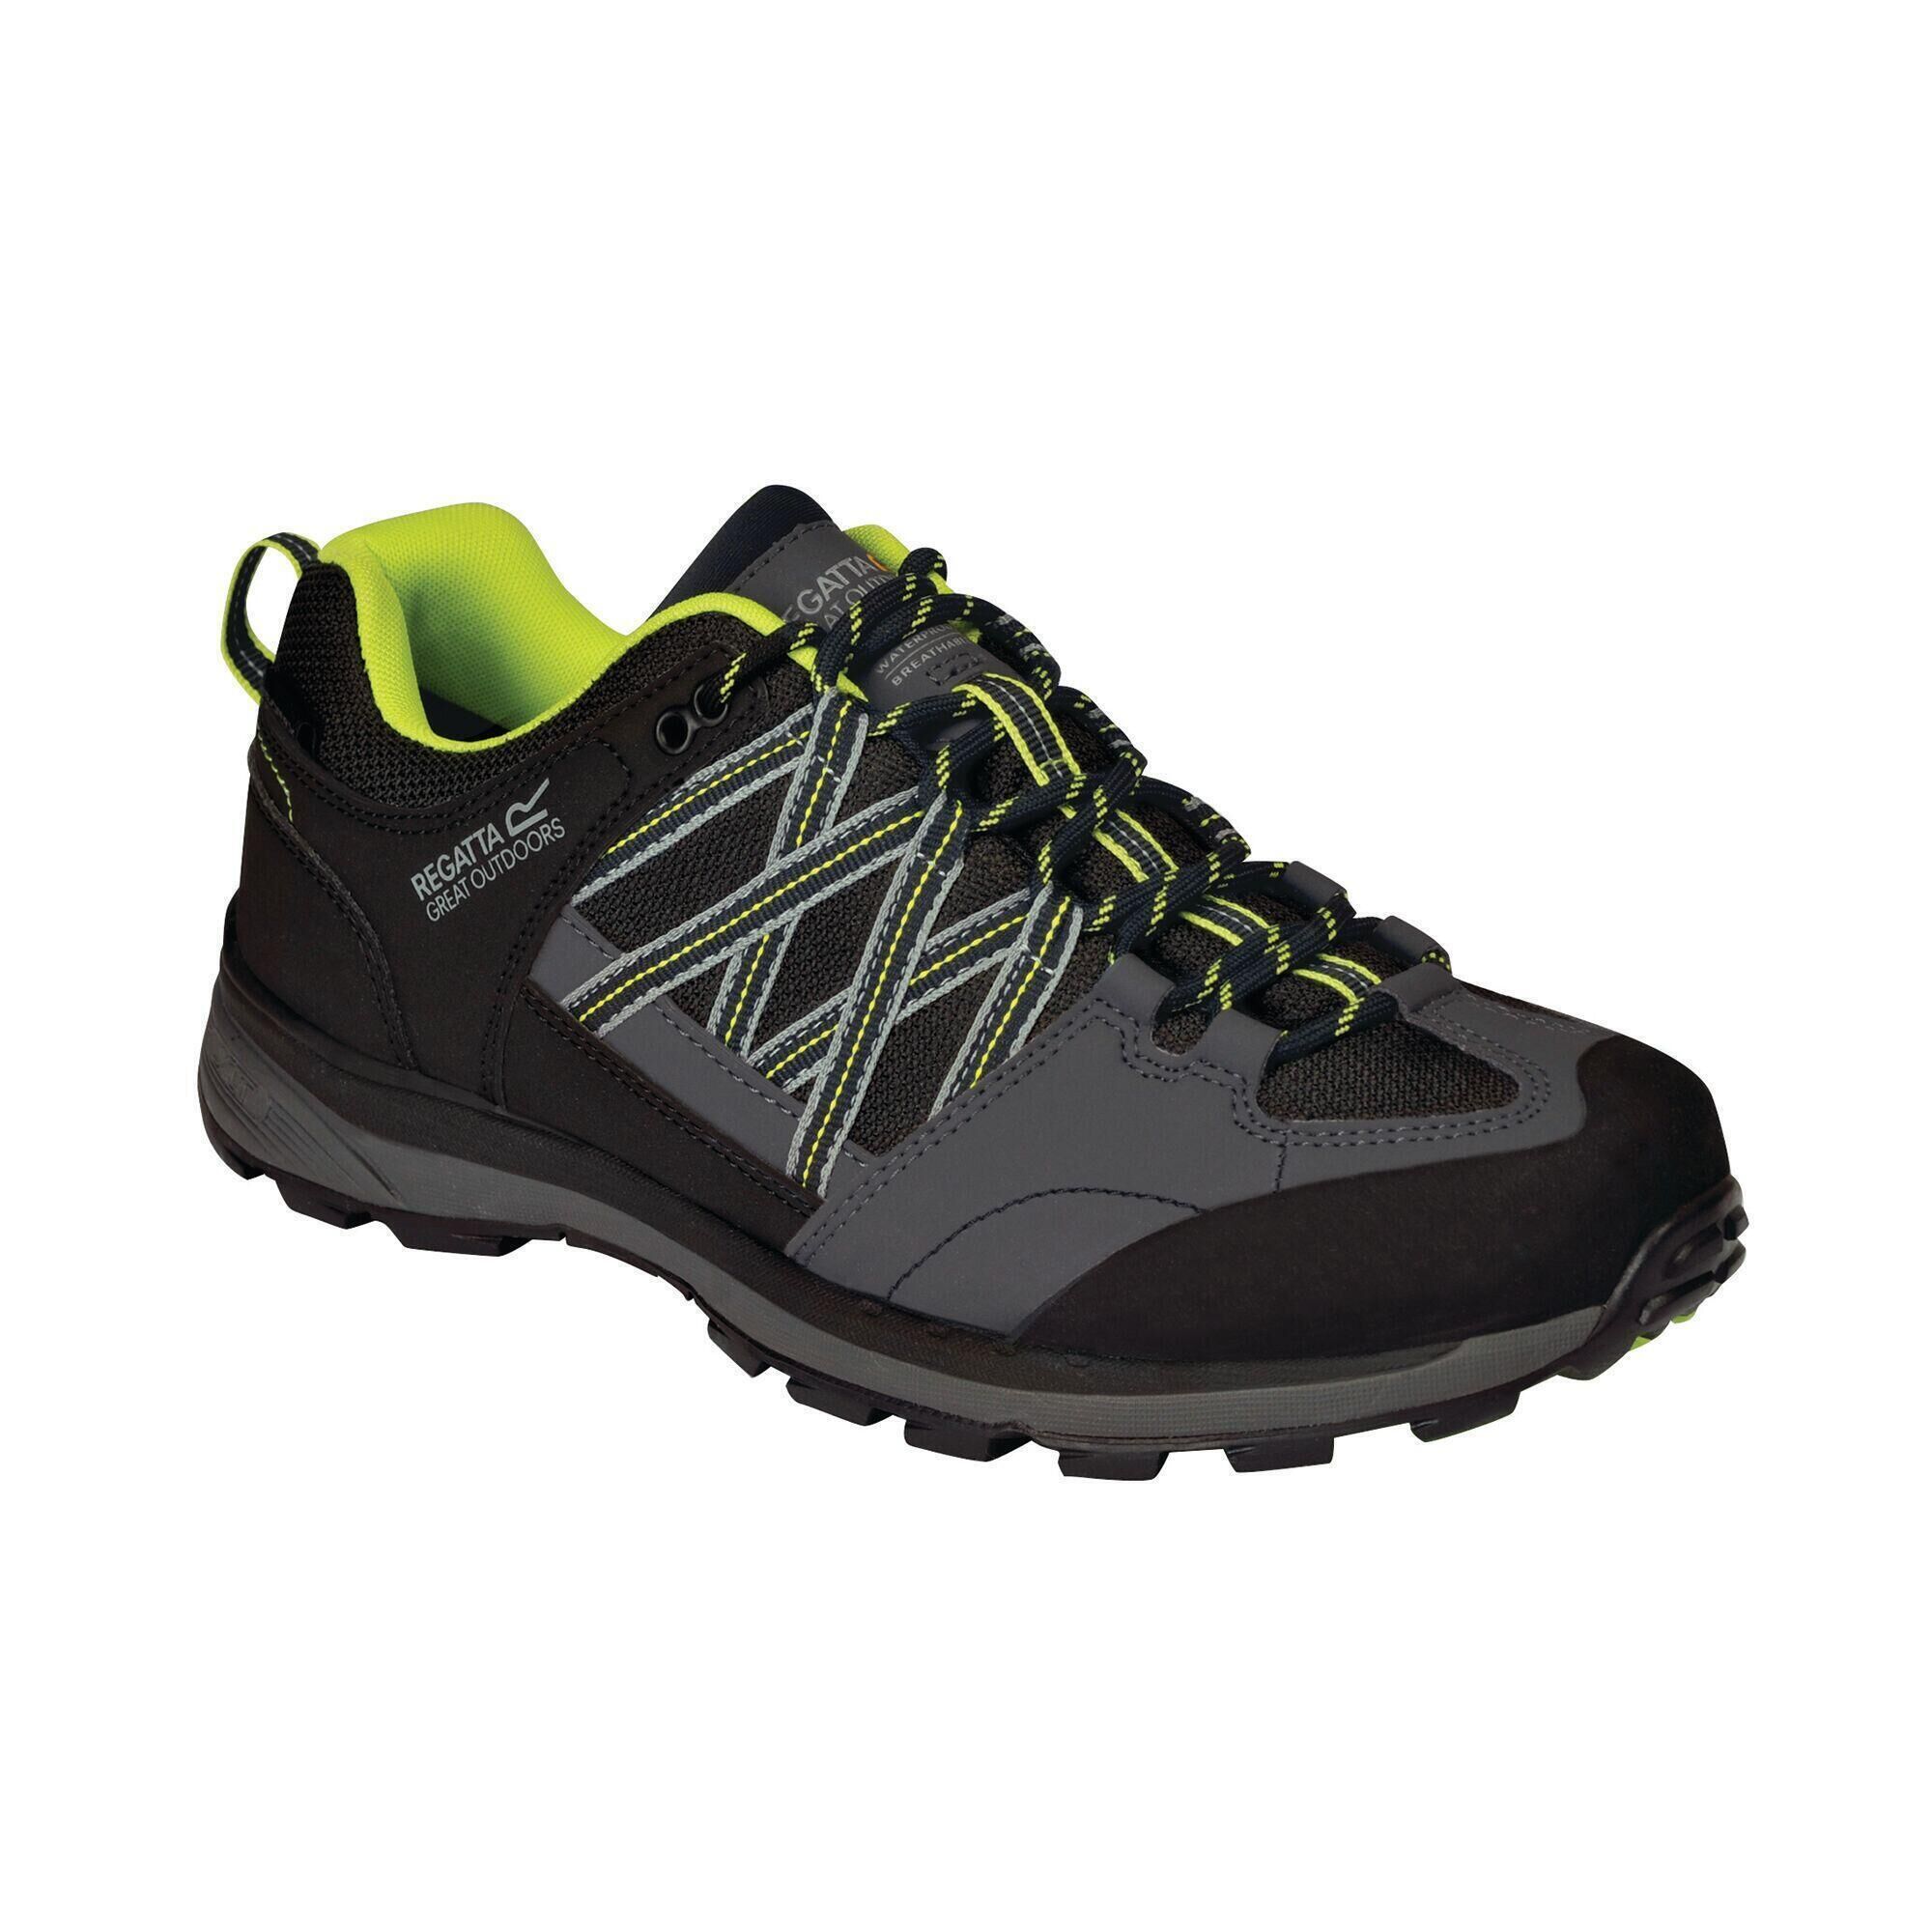 REGATTA Samaris II Men's Hiking Shoes - Black/Light Green